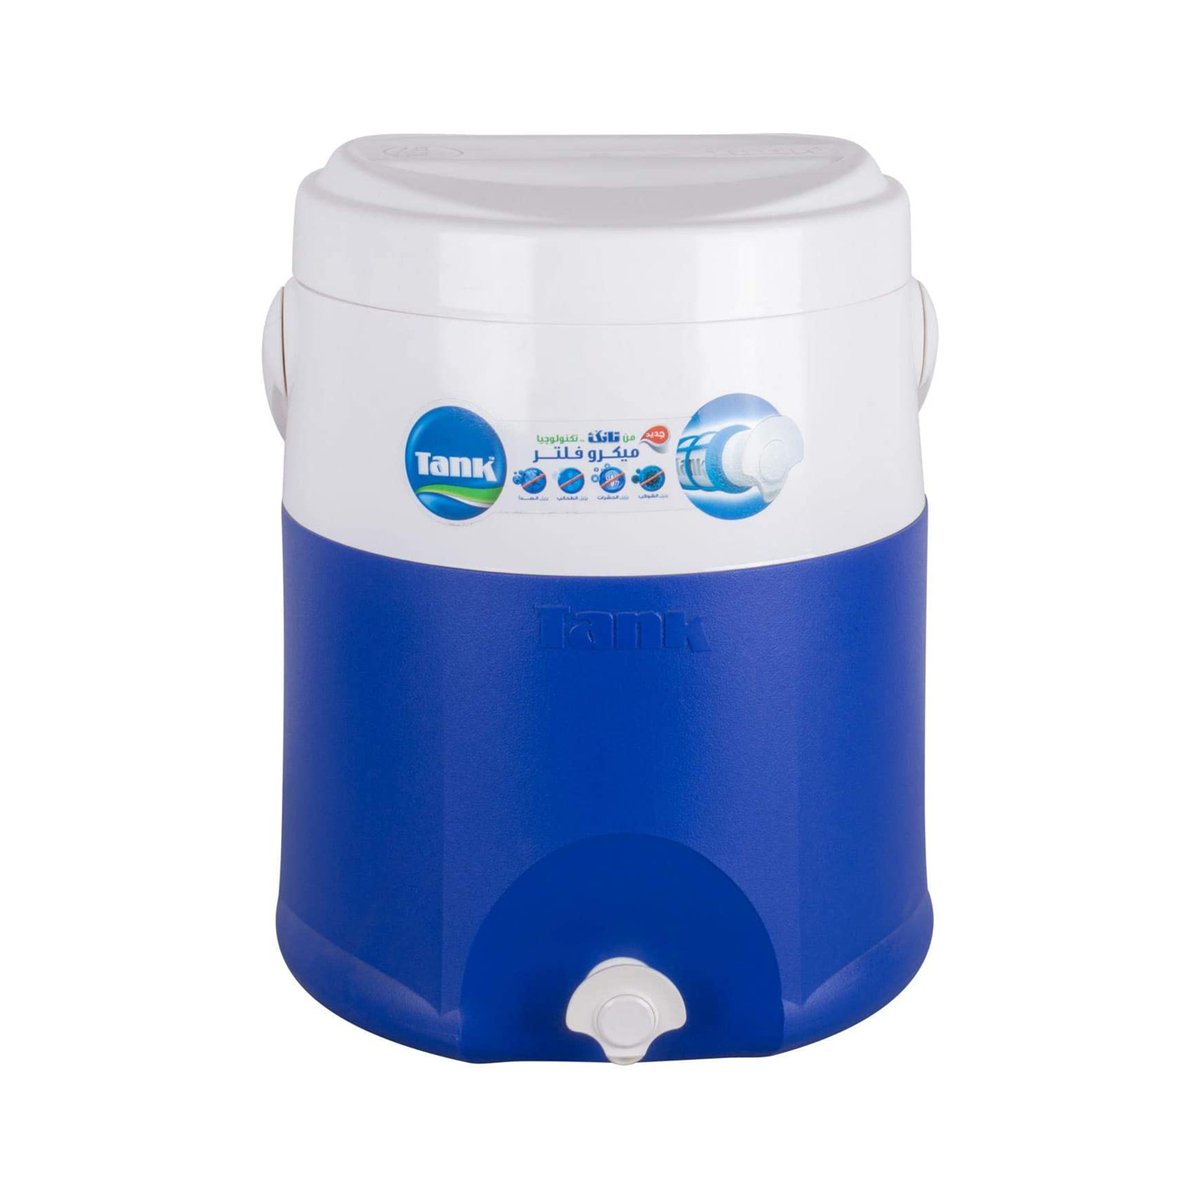 A 220 liter blue water tank : Buy Online at Best Price in KSA